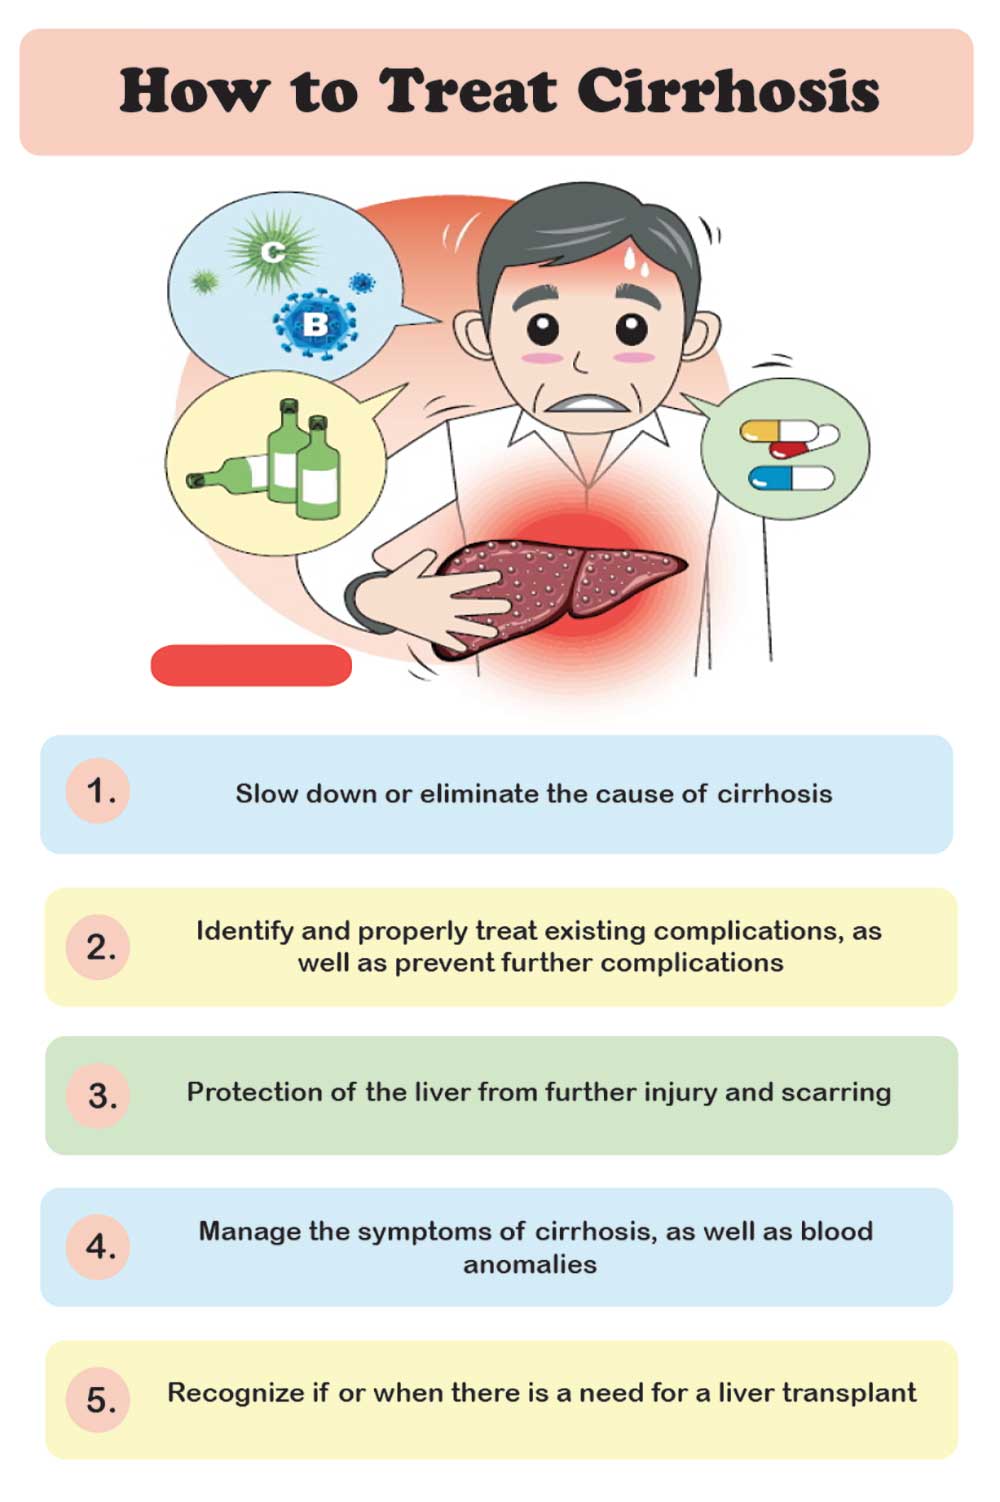 How to treat cirrhosis